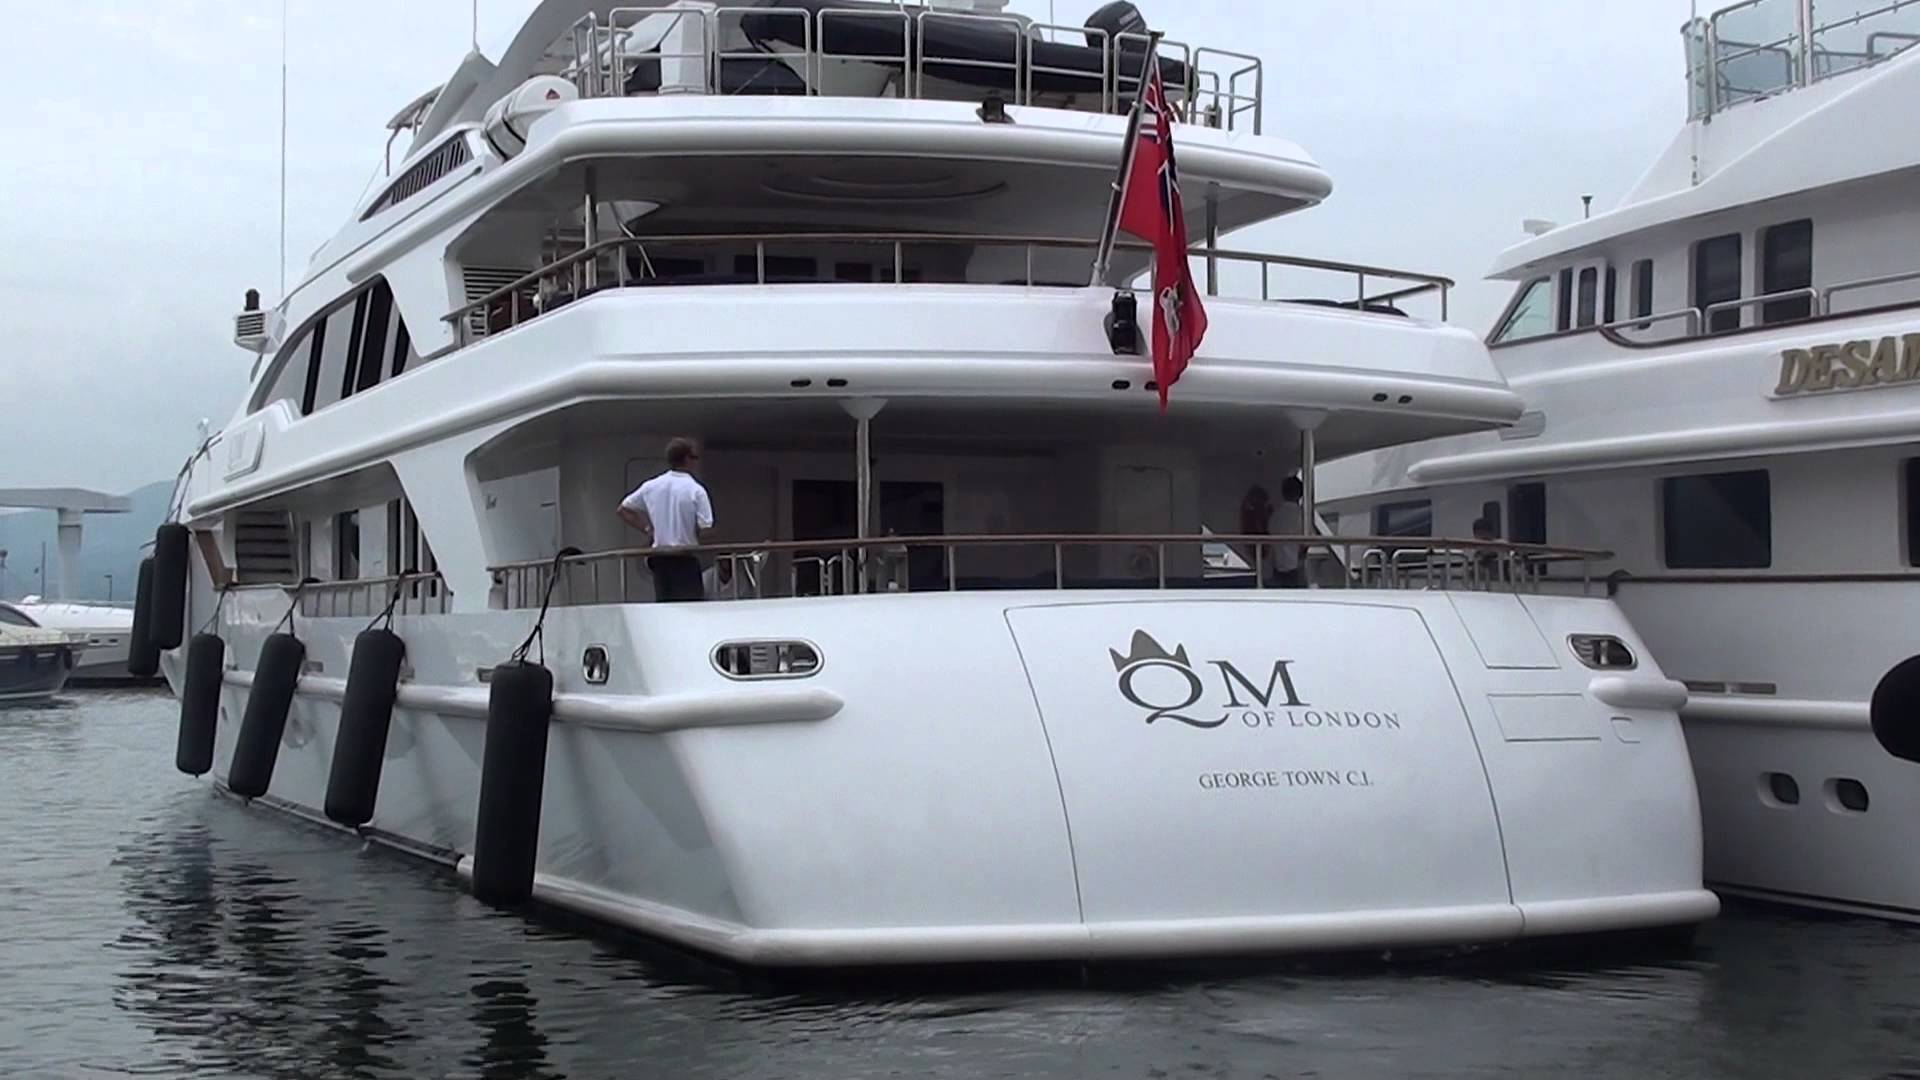 qm of london yacht